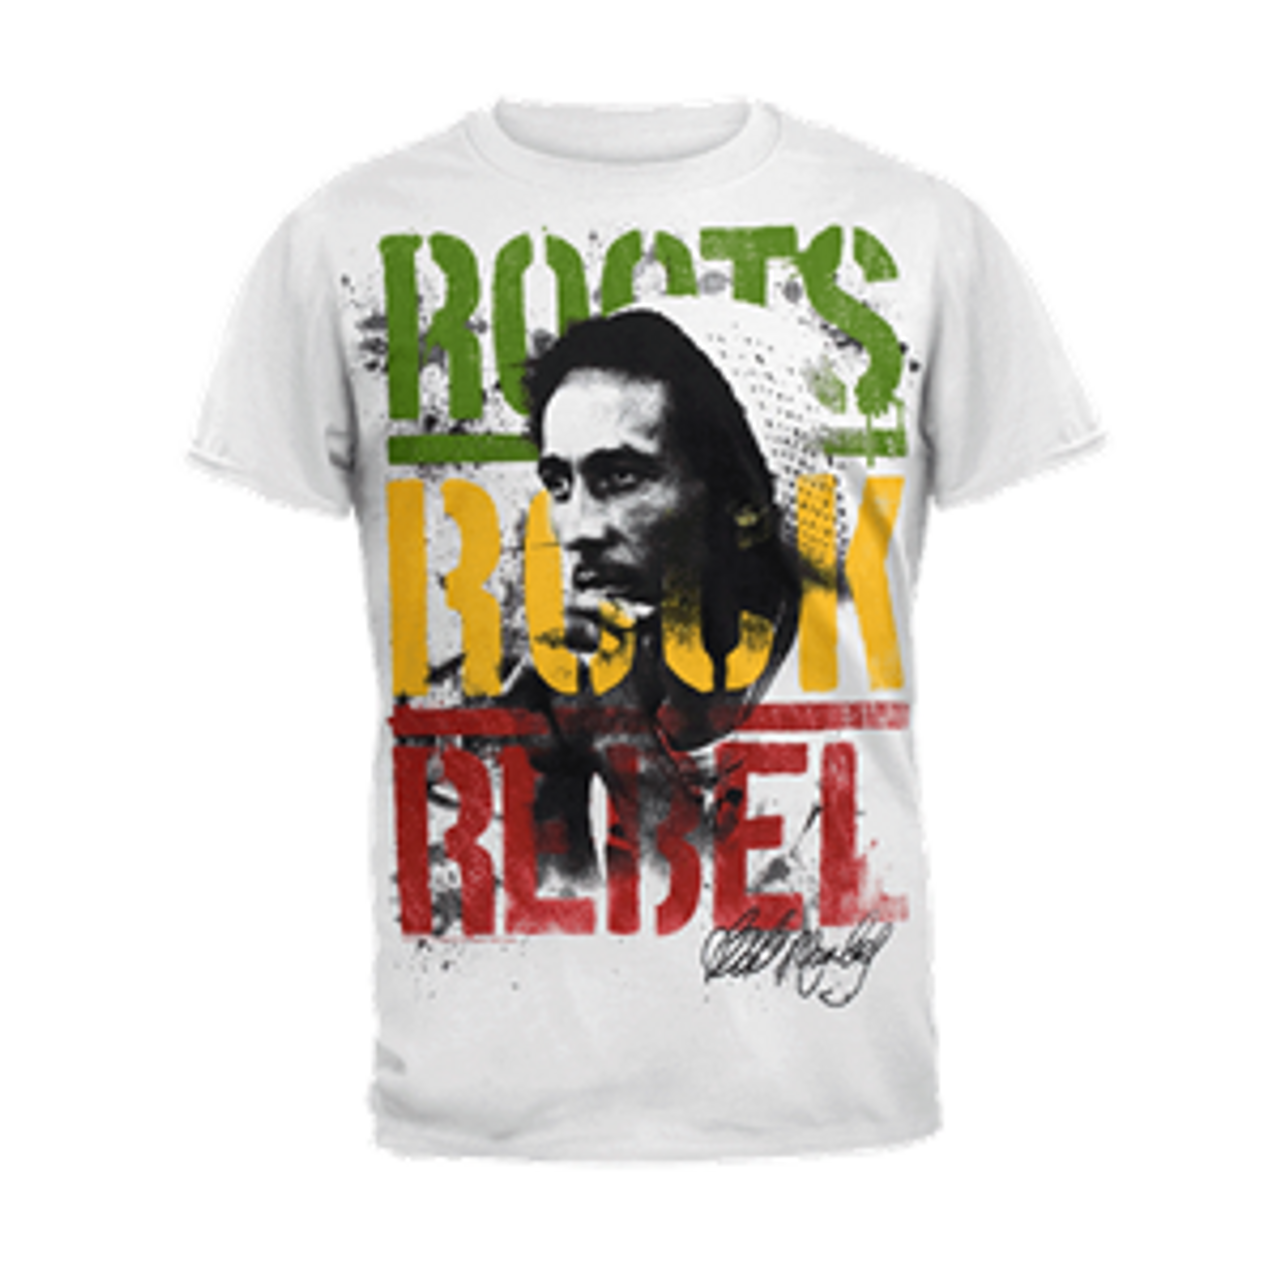 Bob Marley Roots Rock Rebel T-Shirt - VP Reggae